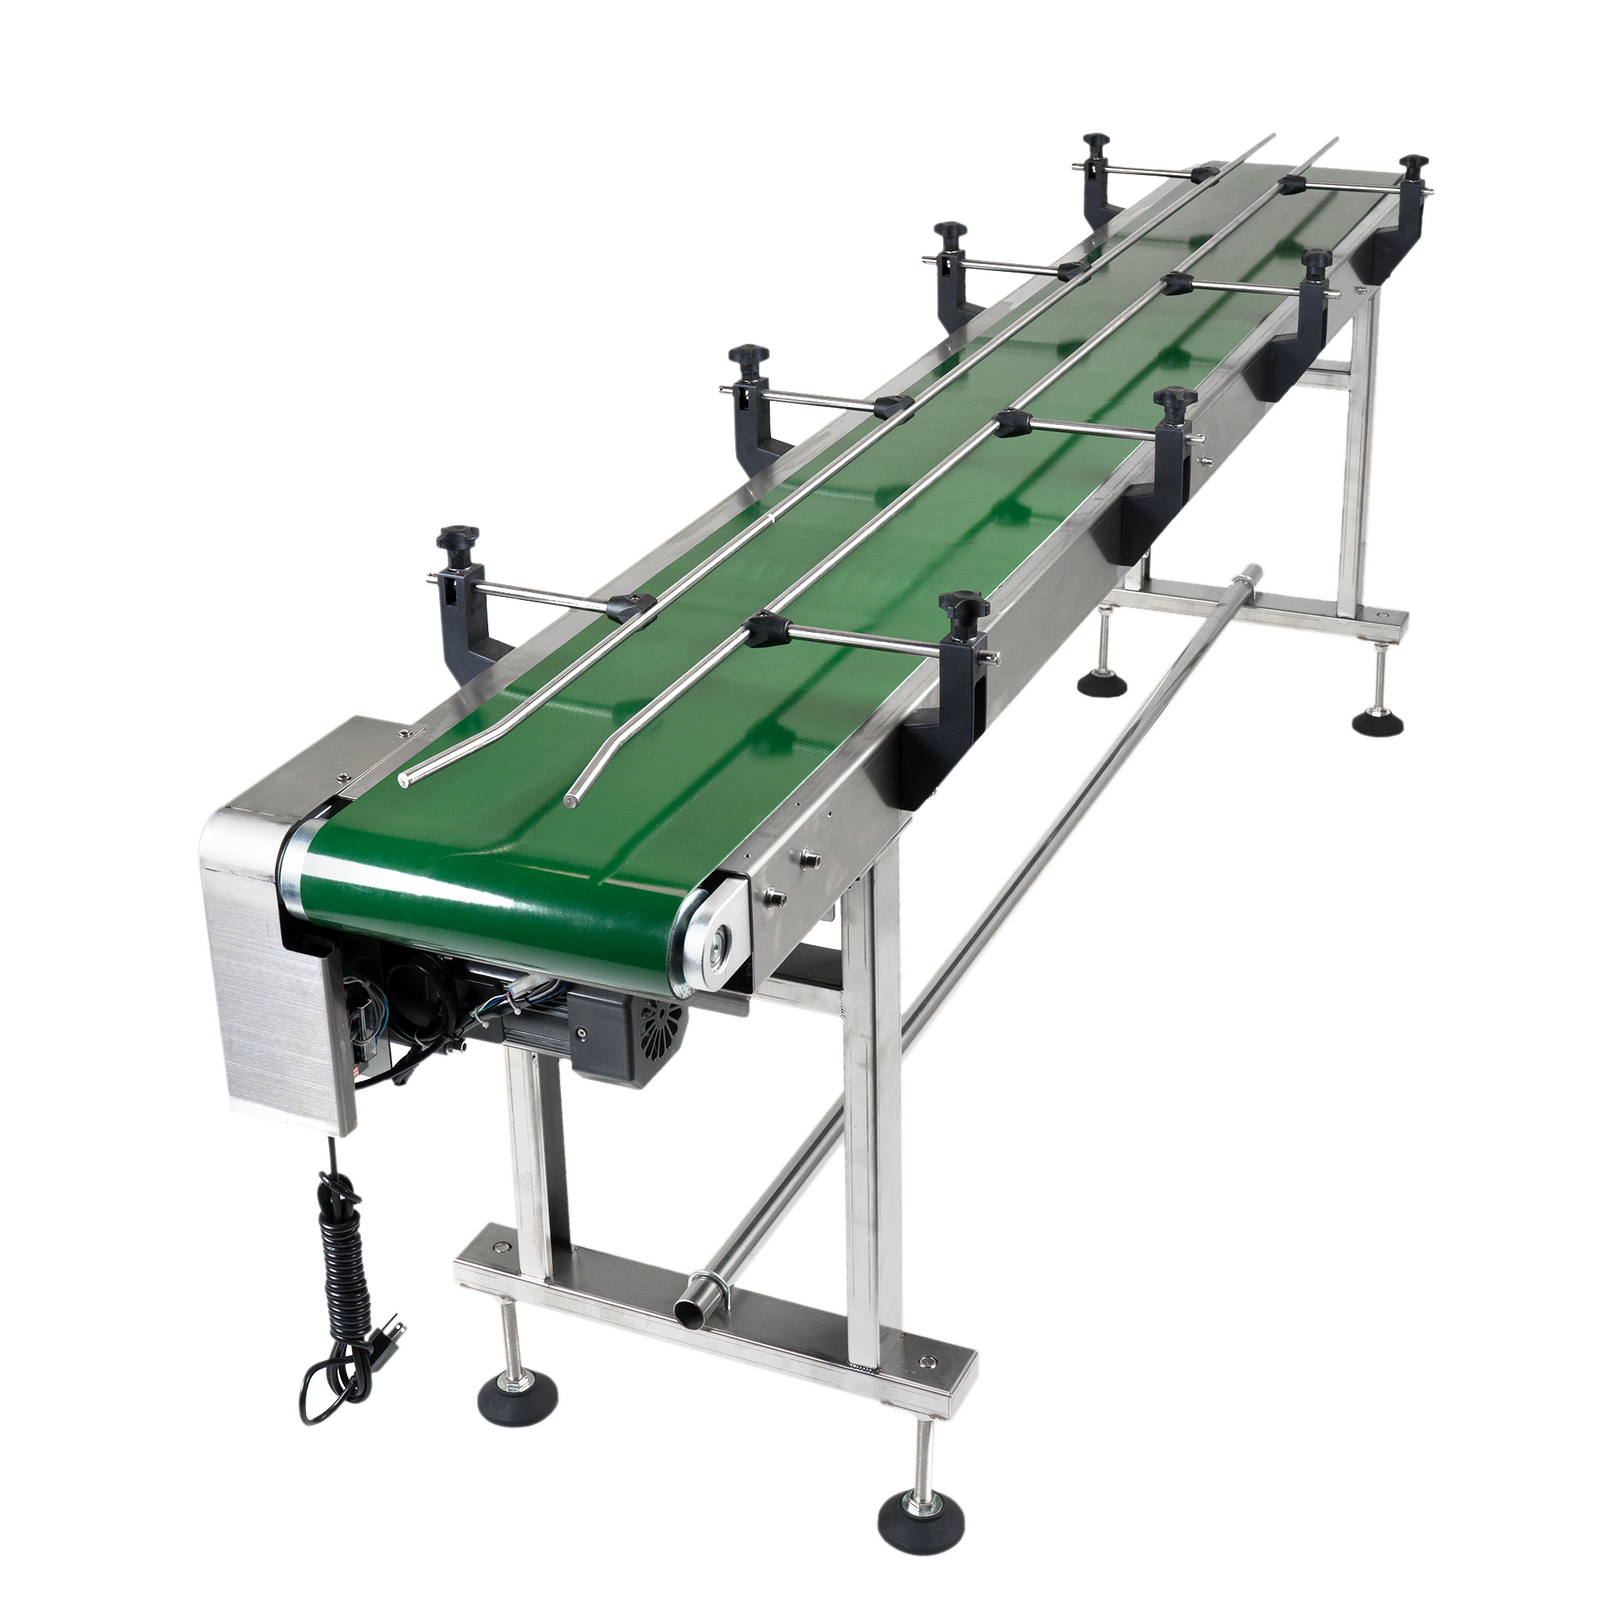 long motorized stainless steel belt conveyor with green rubber belt by JORES TECHNOLOGIES®